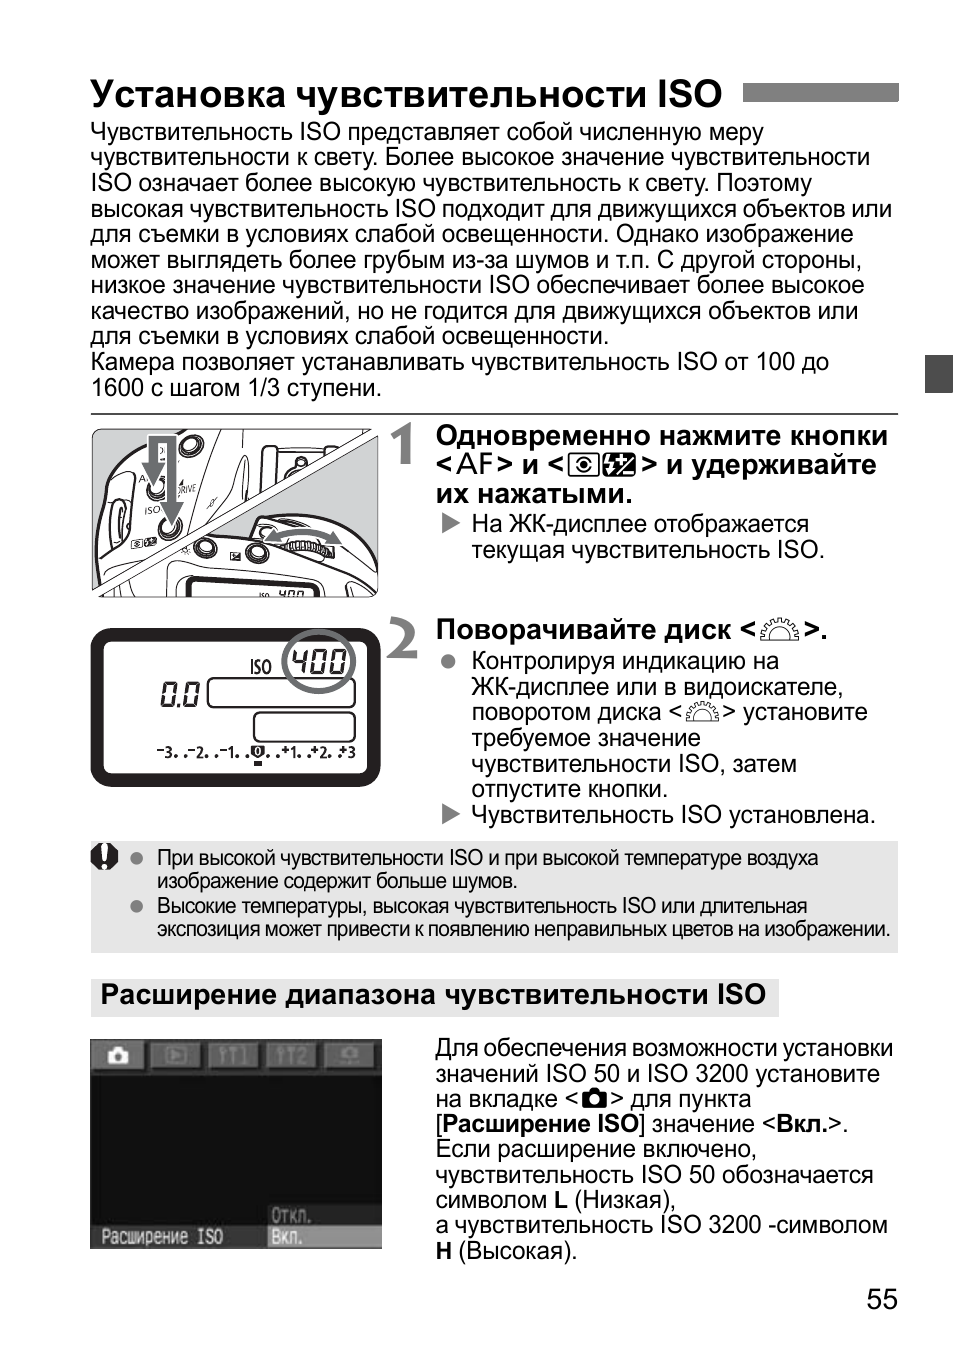 Установка чувствительности iso | Инструкция по эксплуатации Canon EOS 1D Mark II N | Страница 55 / 196